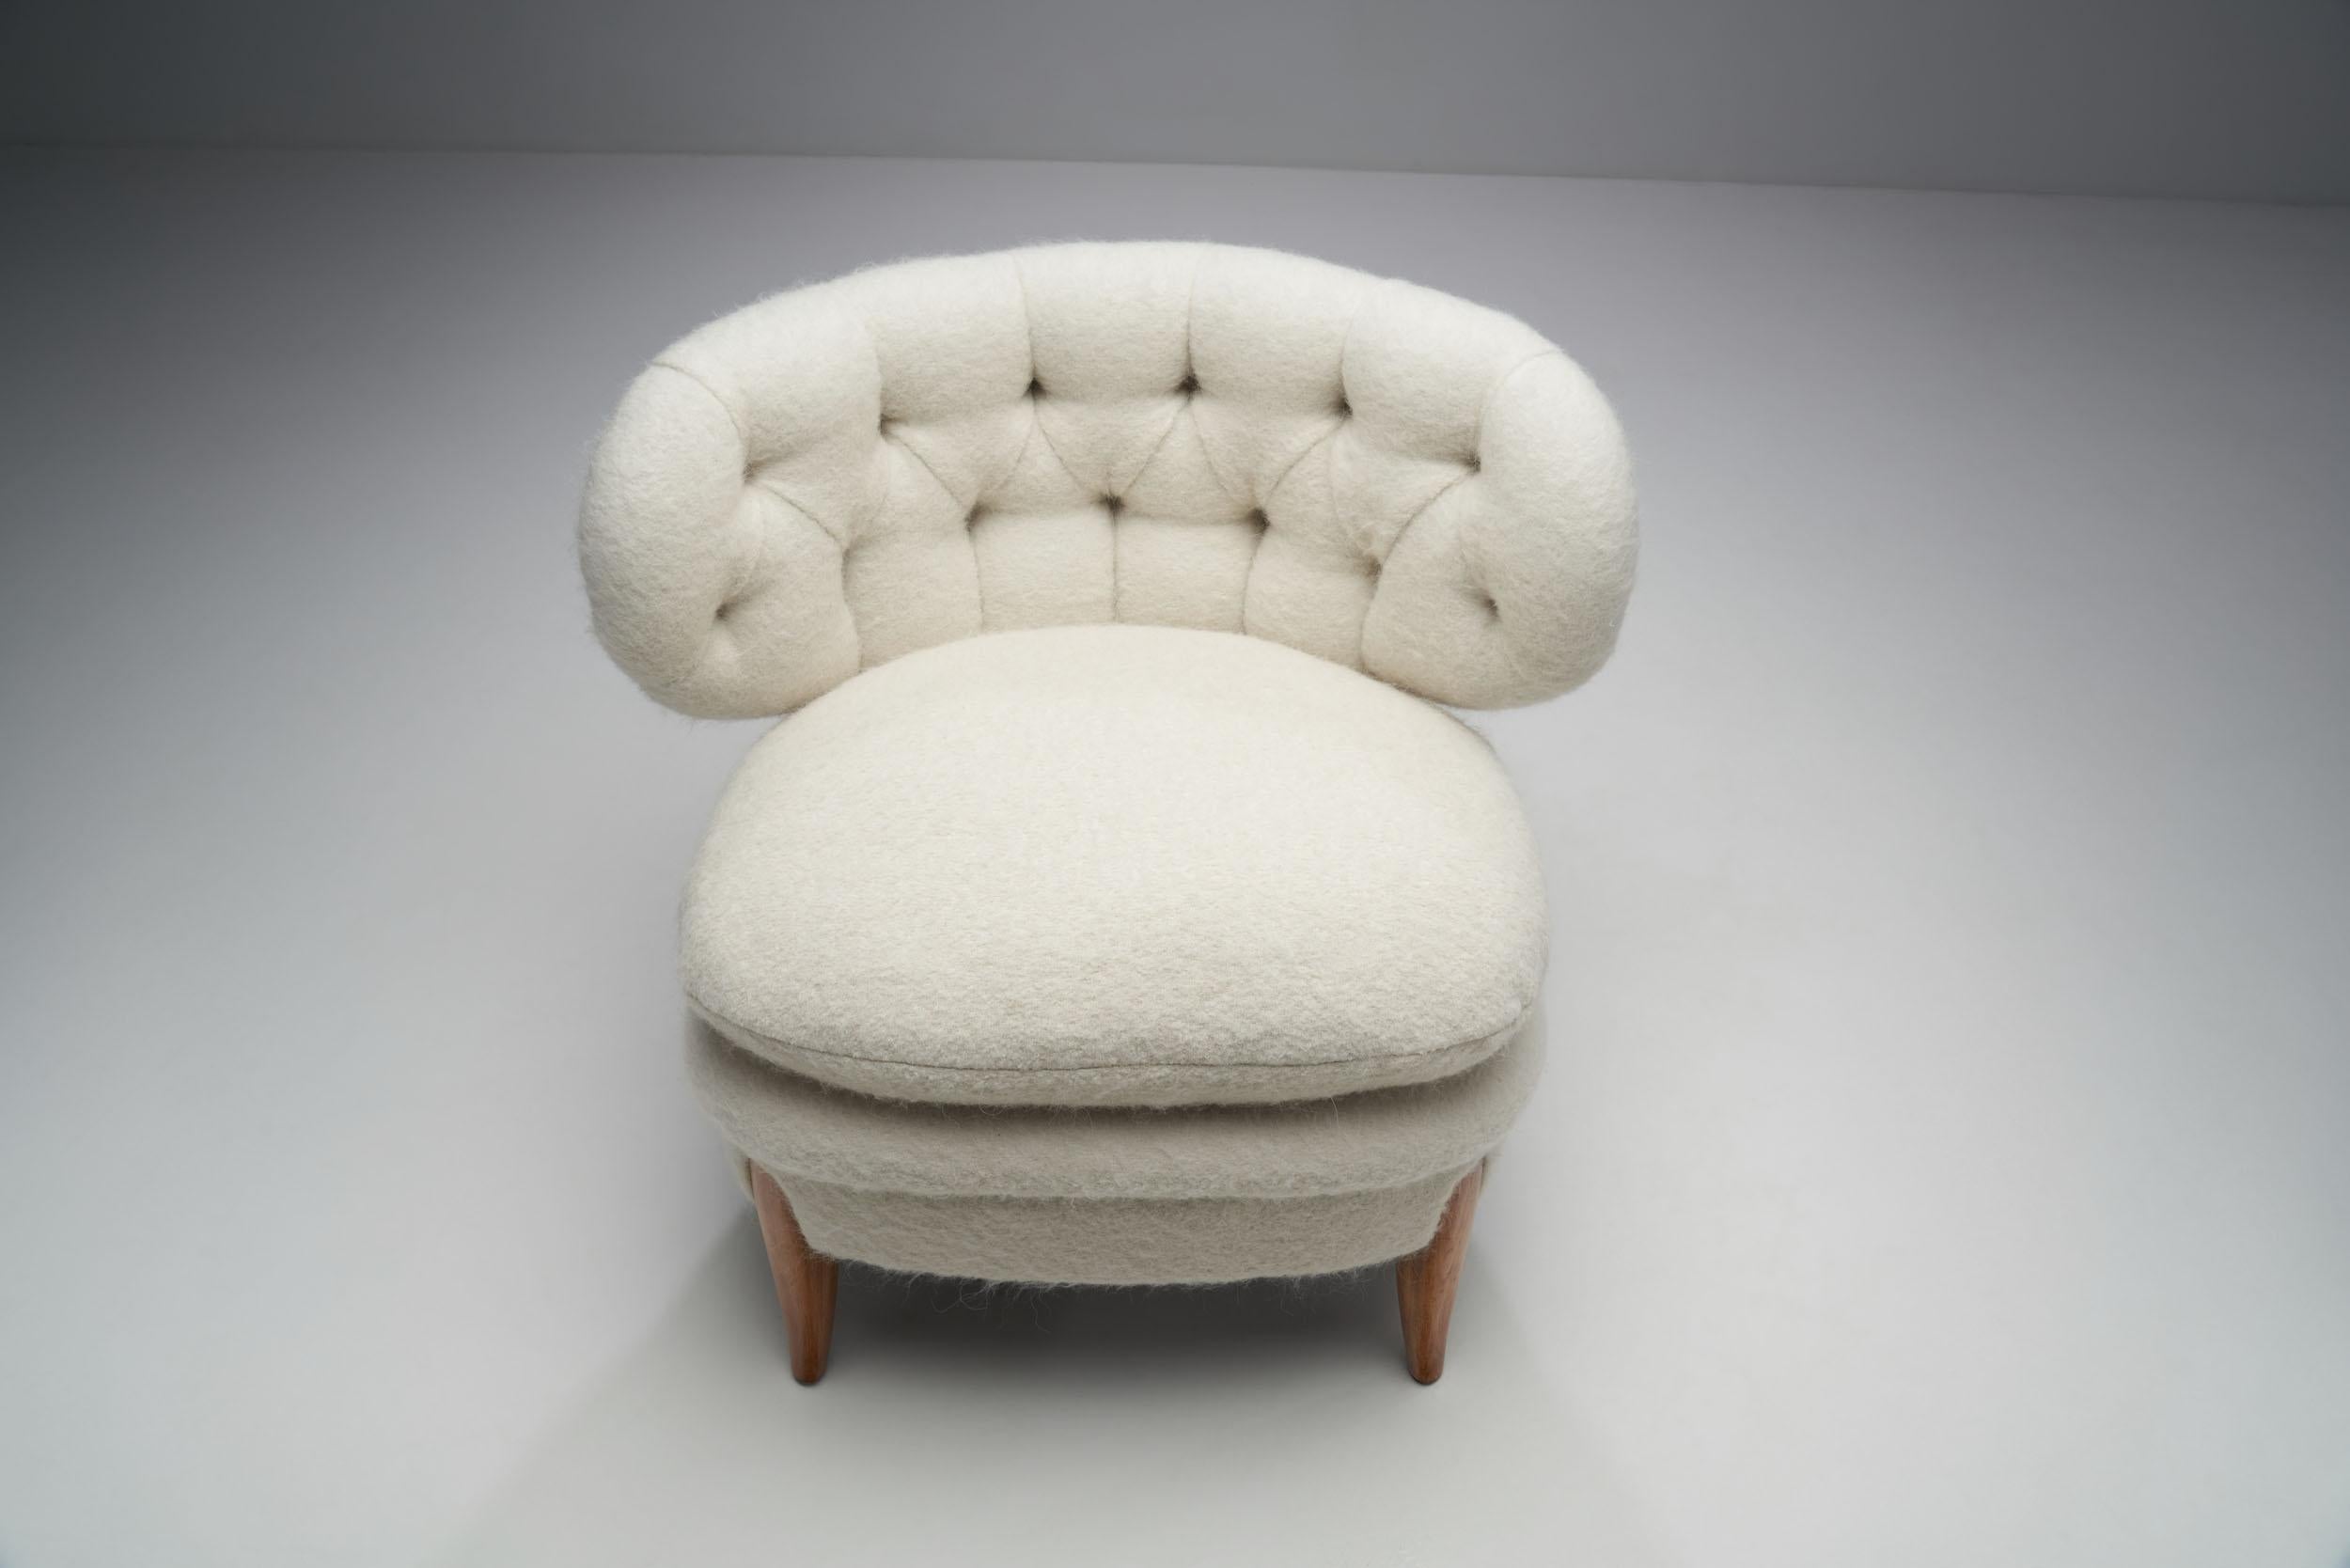 Fabric “Schulz” Lounge Chair by Otto Schulz for Jio Möbler Jönköping, Sweden, 1940s